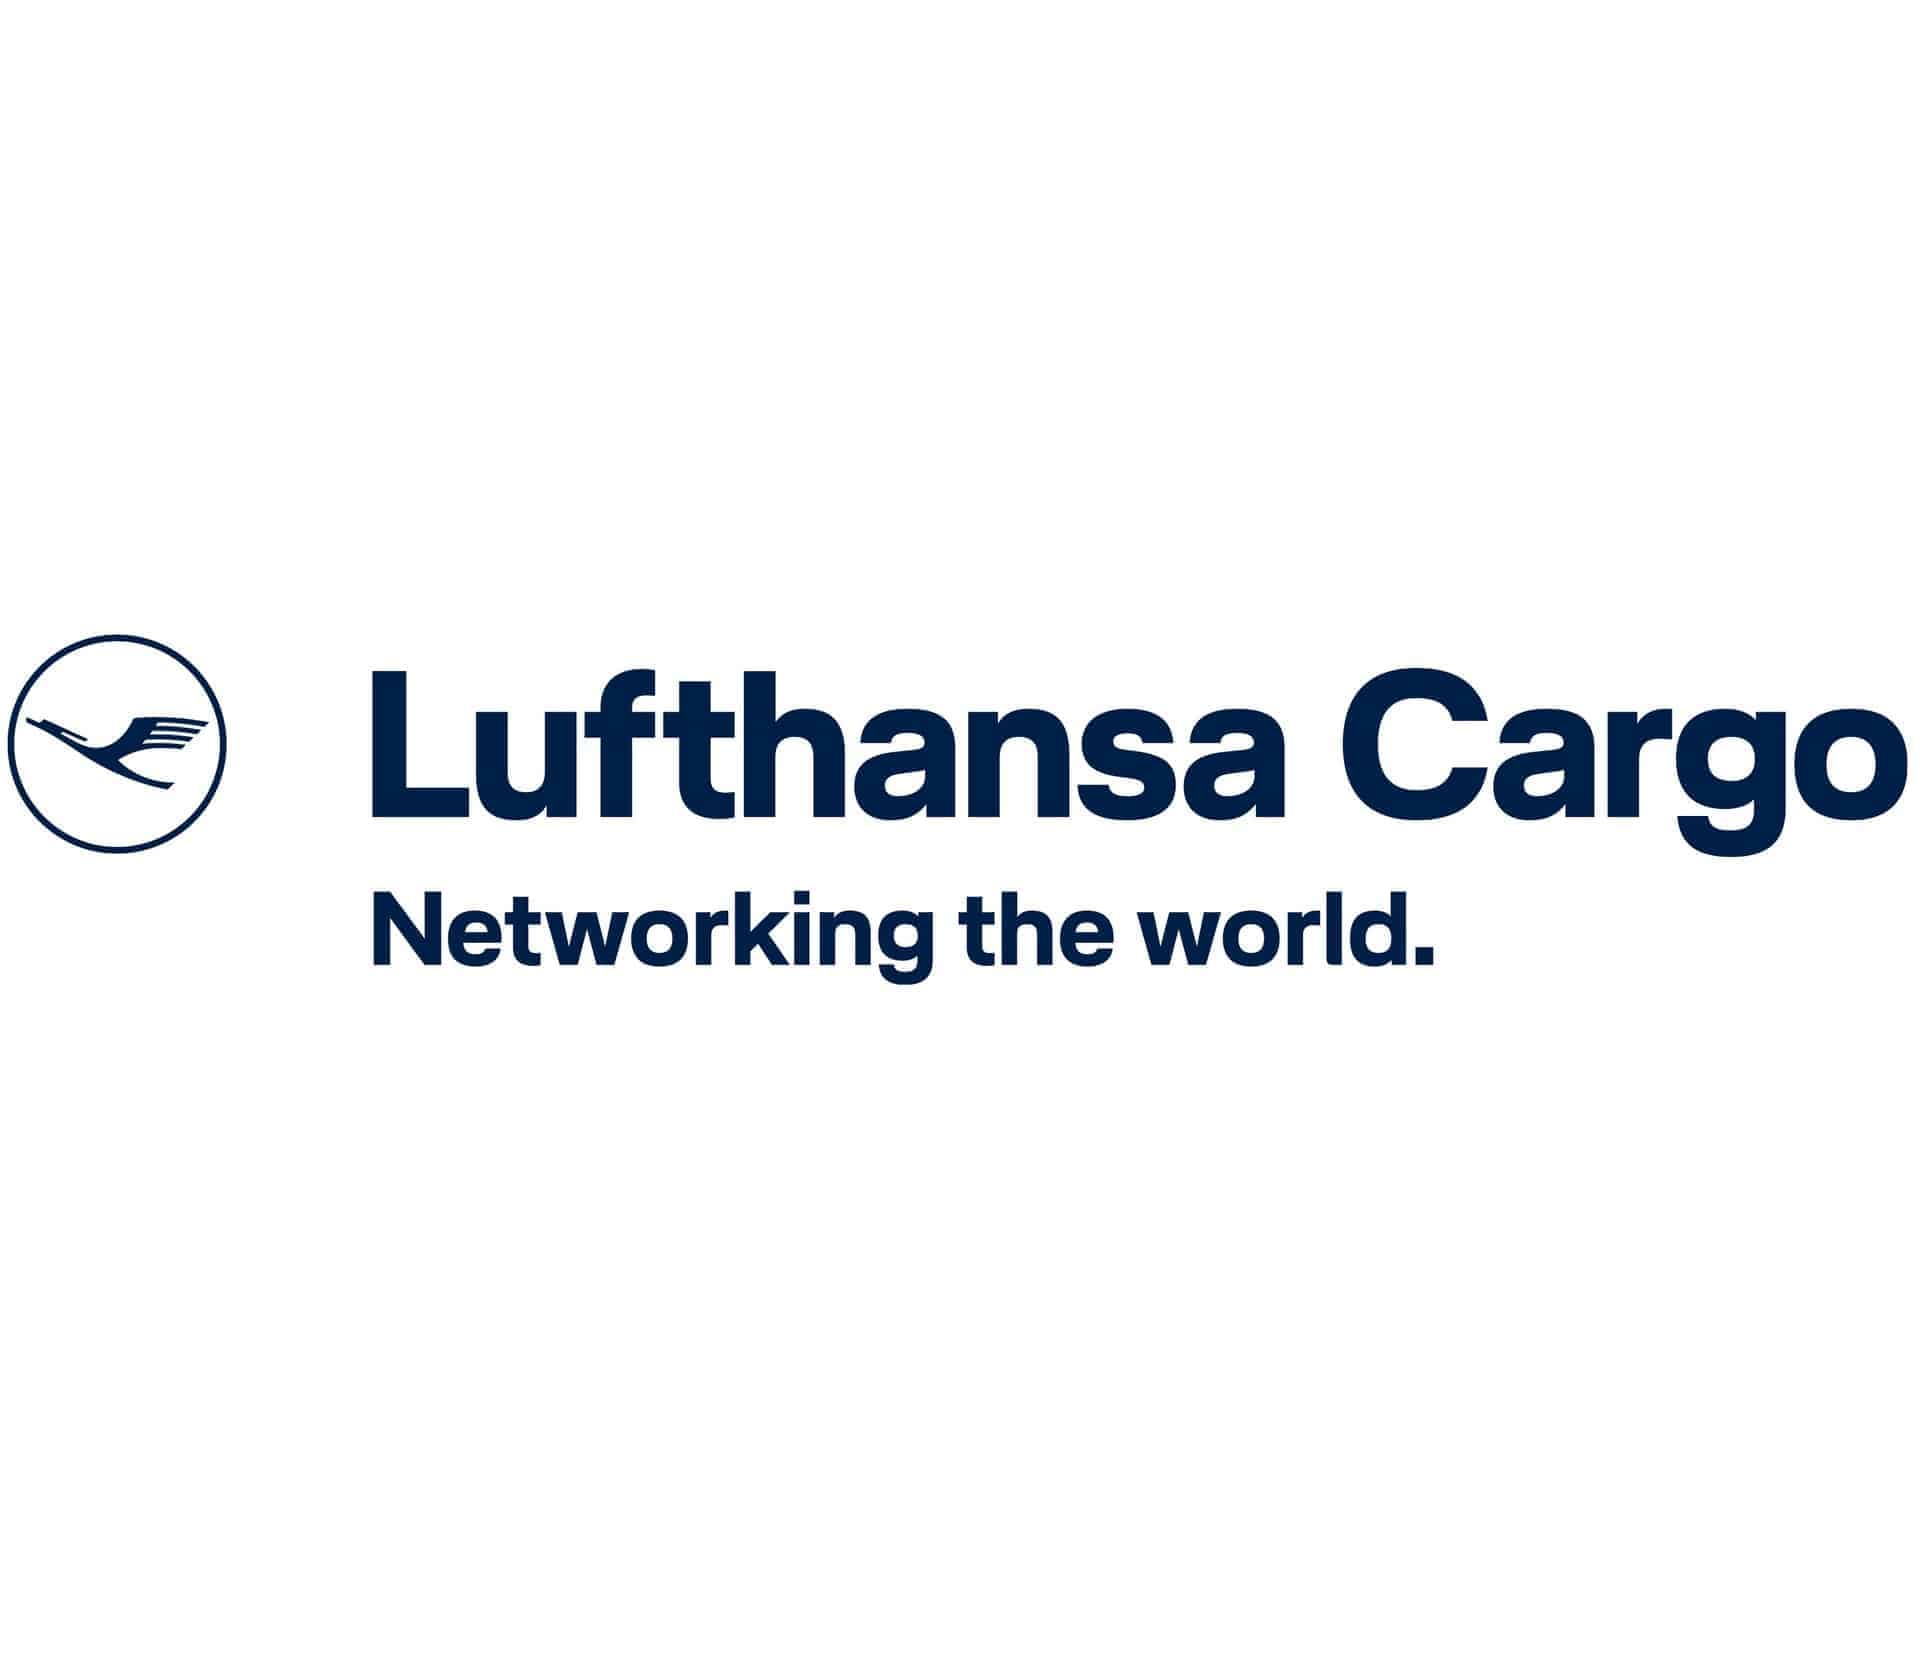 FlyPharma speaker announcement: Lufthansa Cargo